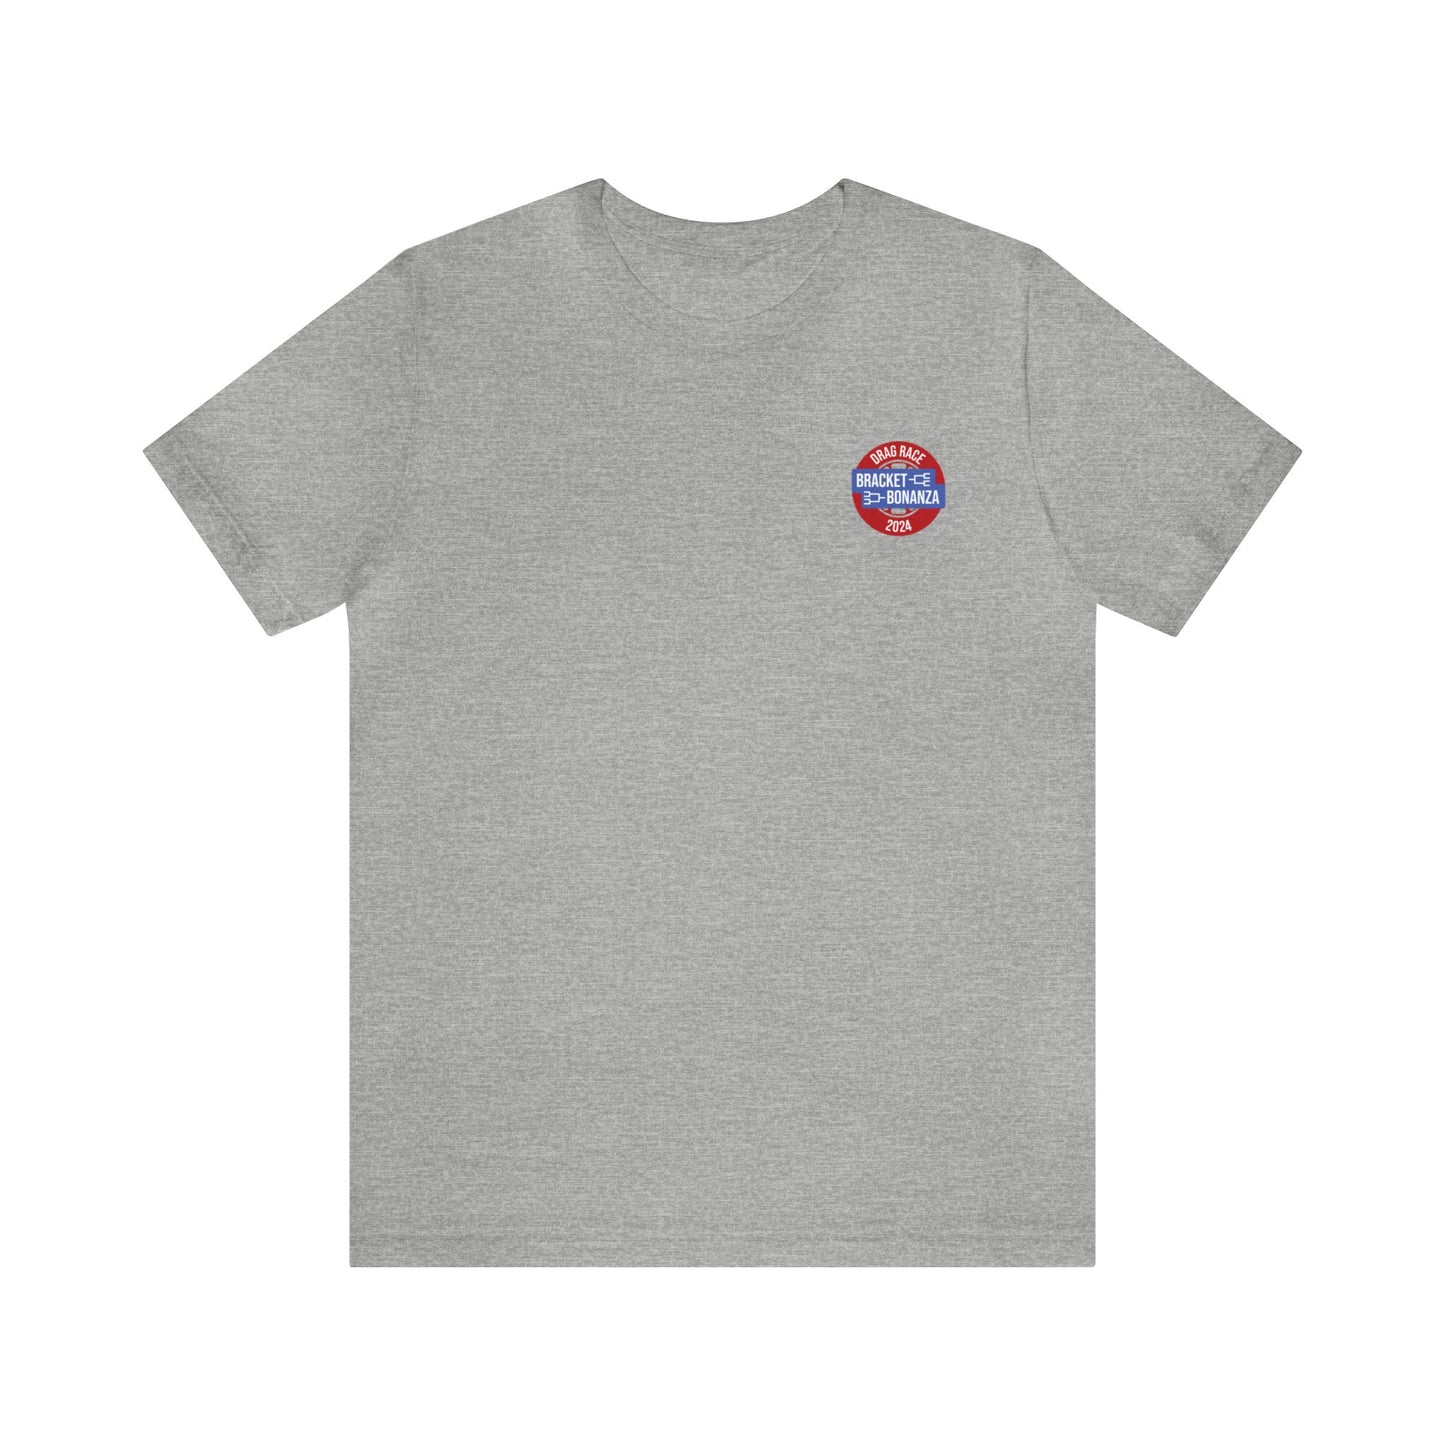 DRBB 2024 T-Shirt